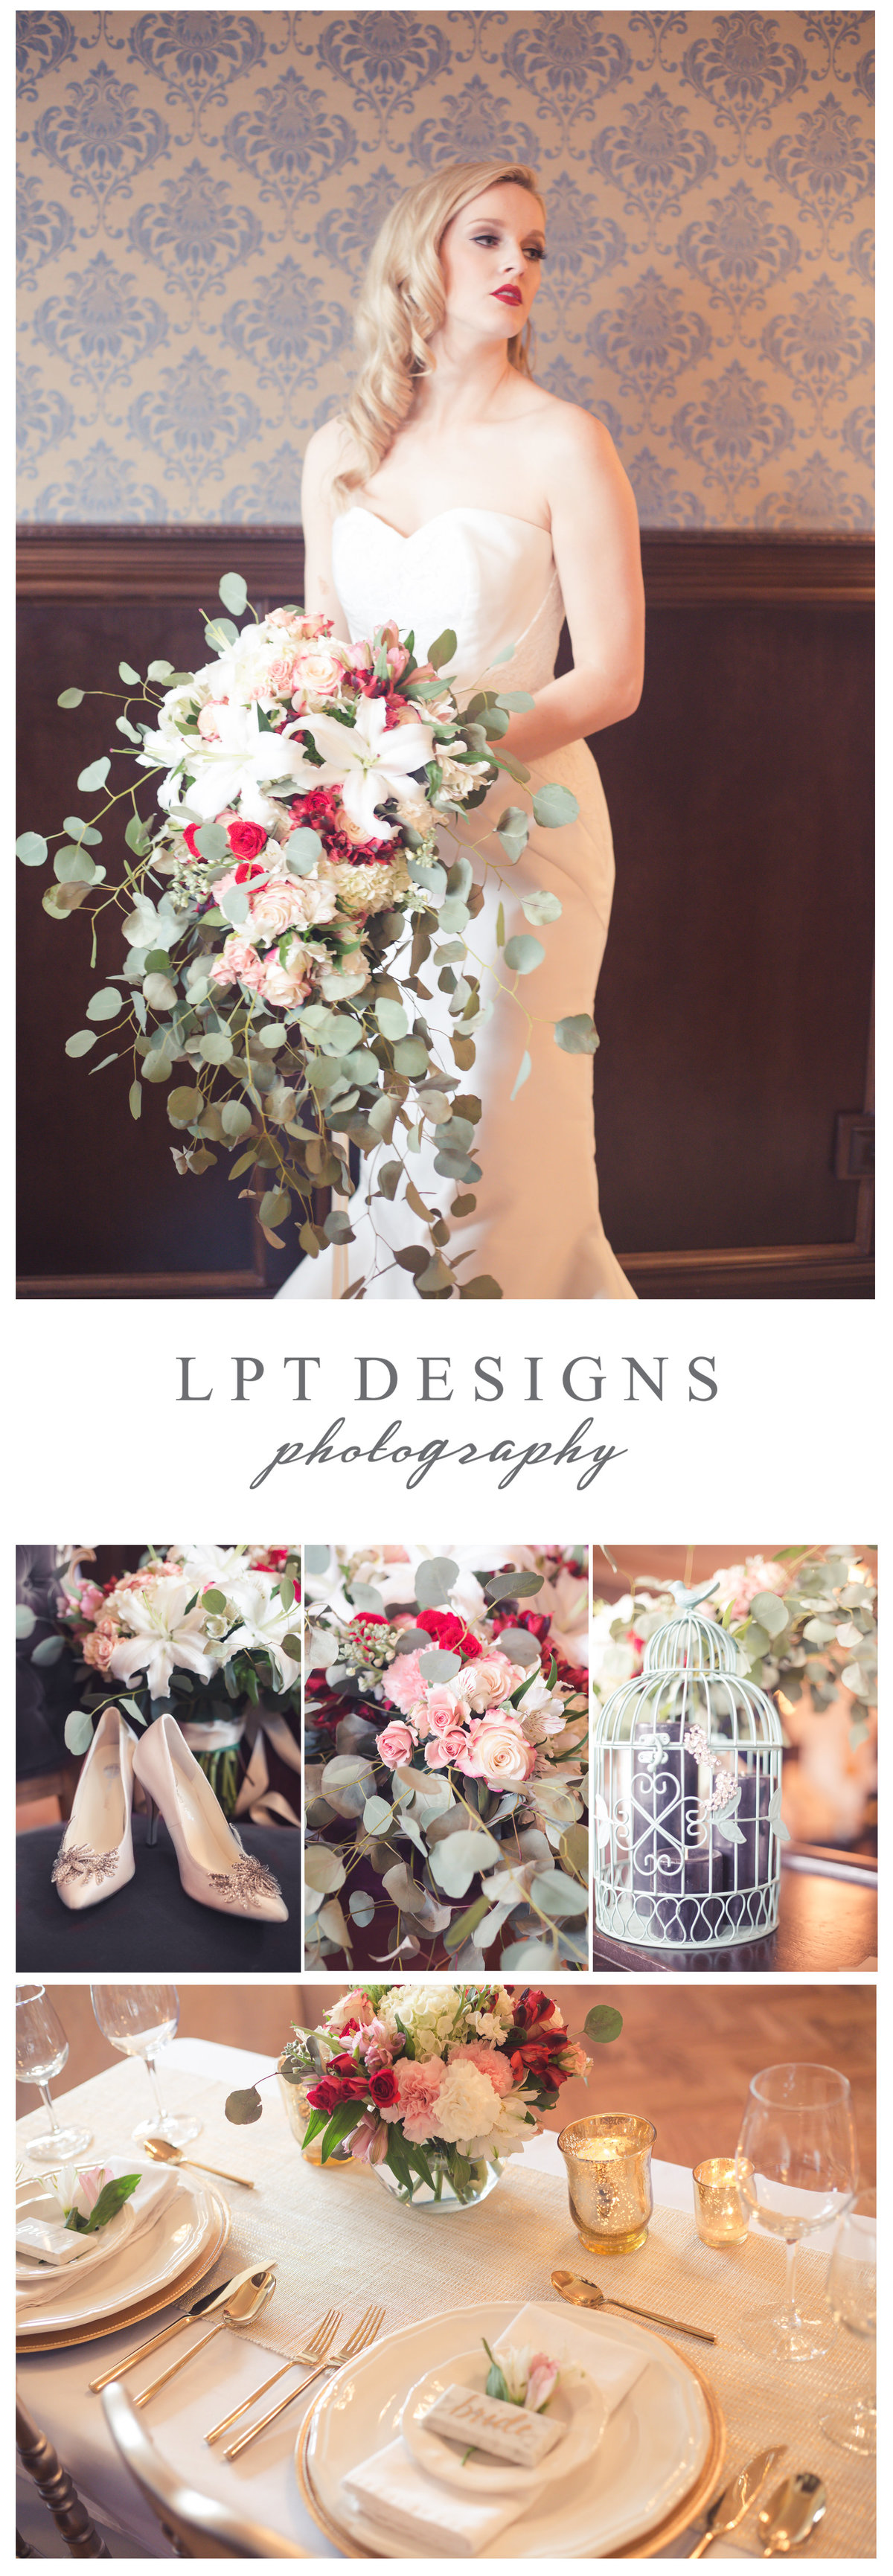 LPT Designs Photography Lydia Thrift Gadsden Alabama Boutique Wedding Photographer New Web 1